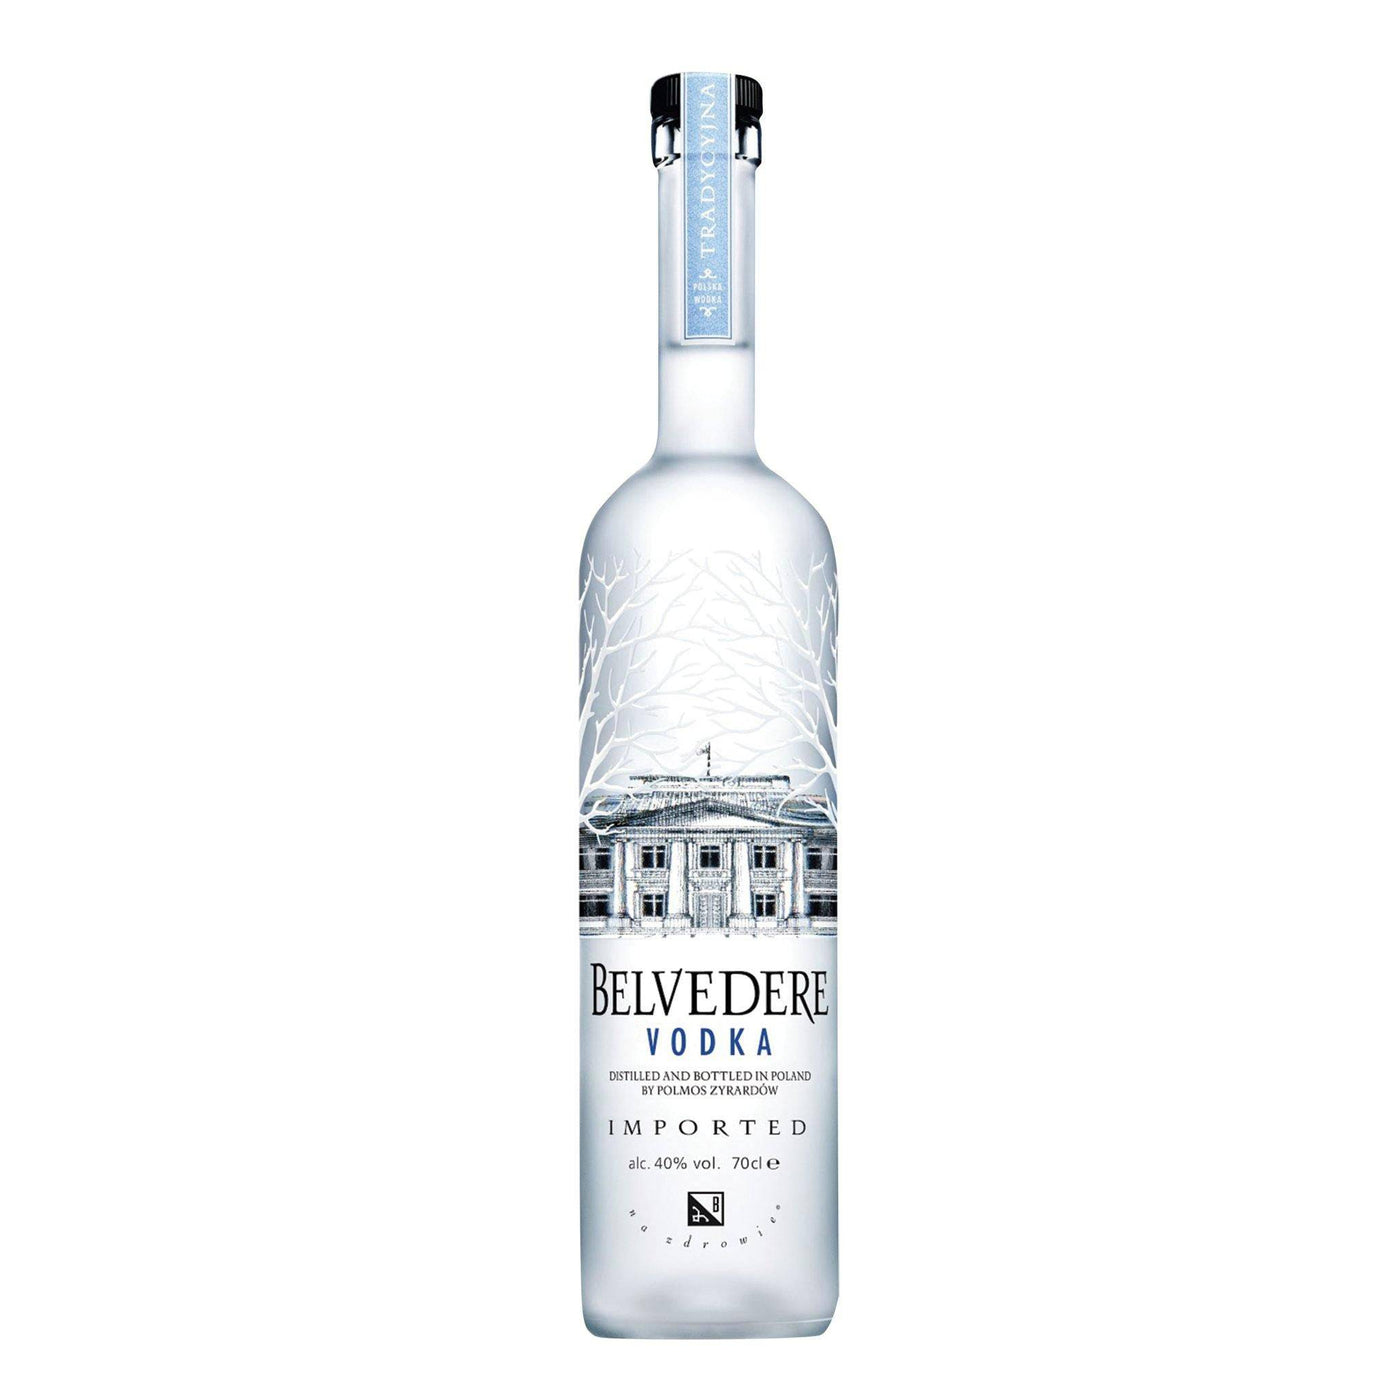 Belvedere Vodka Heritage 750 ml bottle